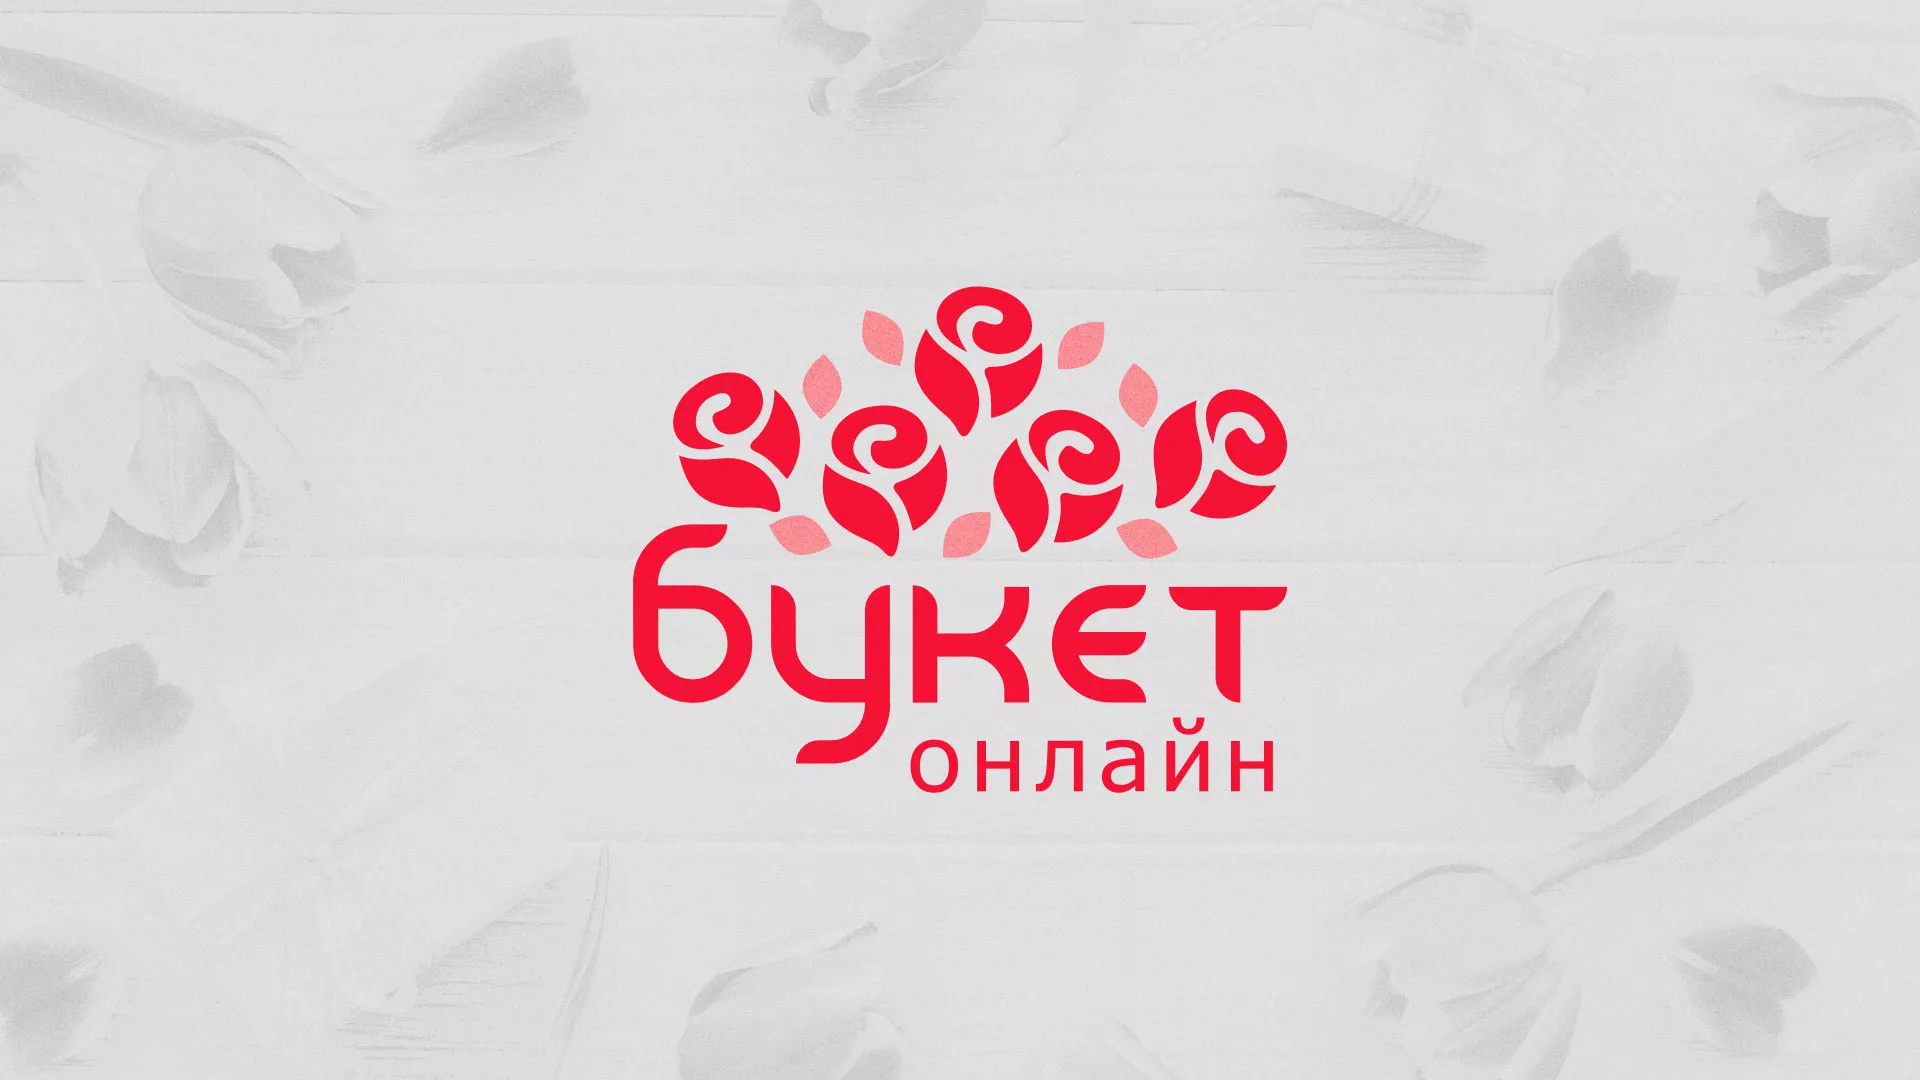 Создание интернет-магазина «Букет-онлайн» по цветам в Лабинске